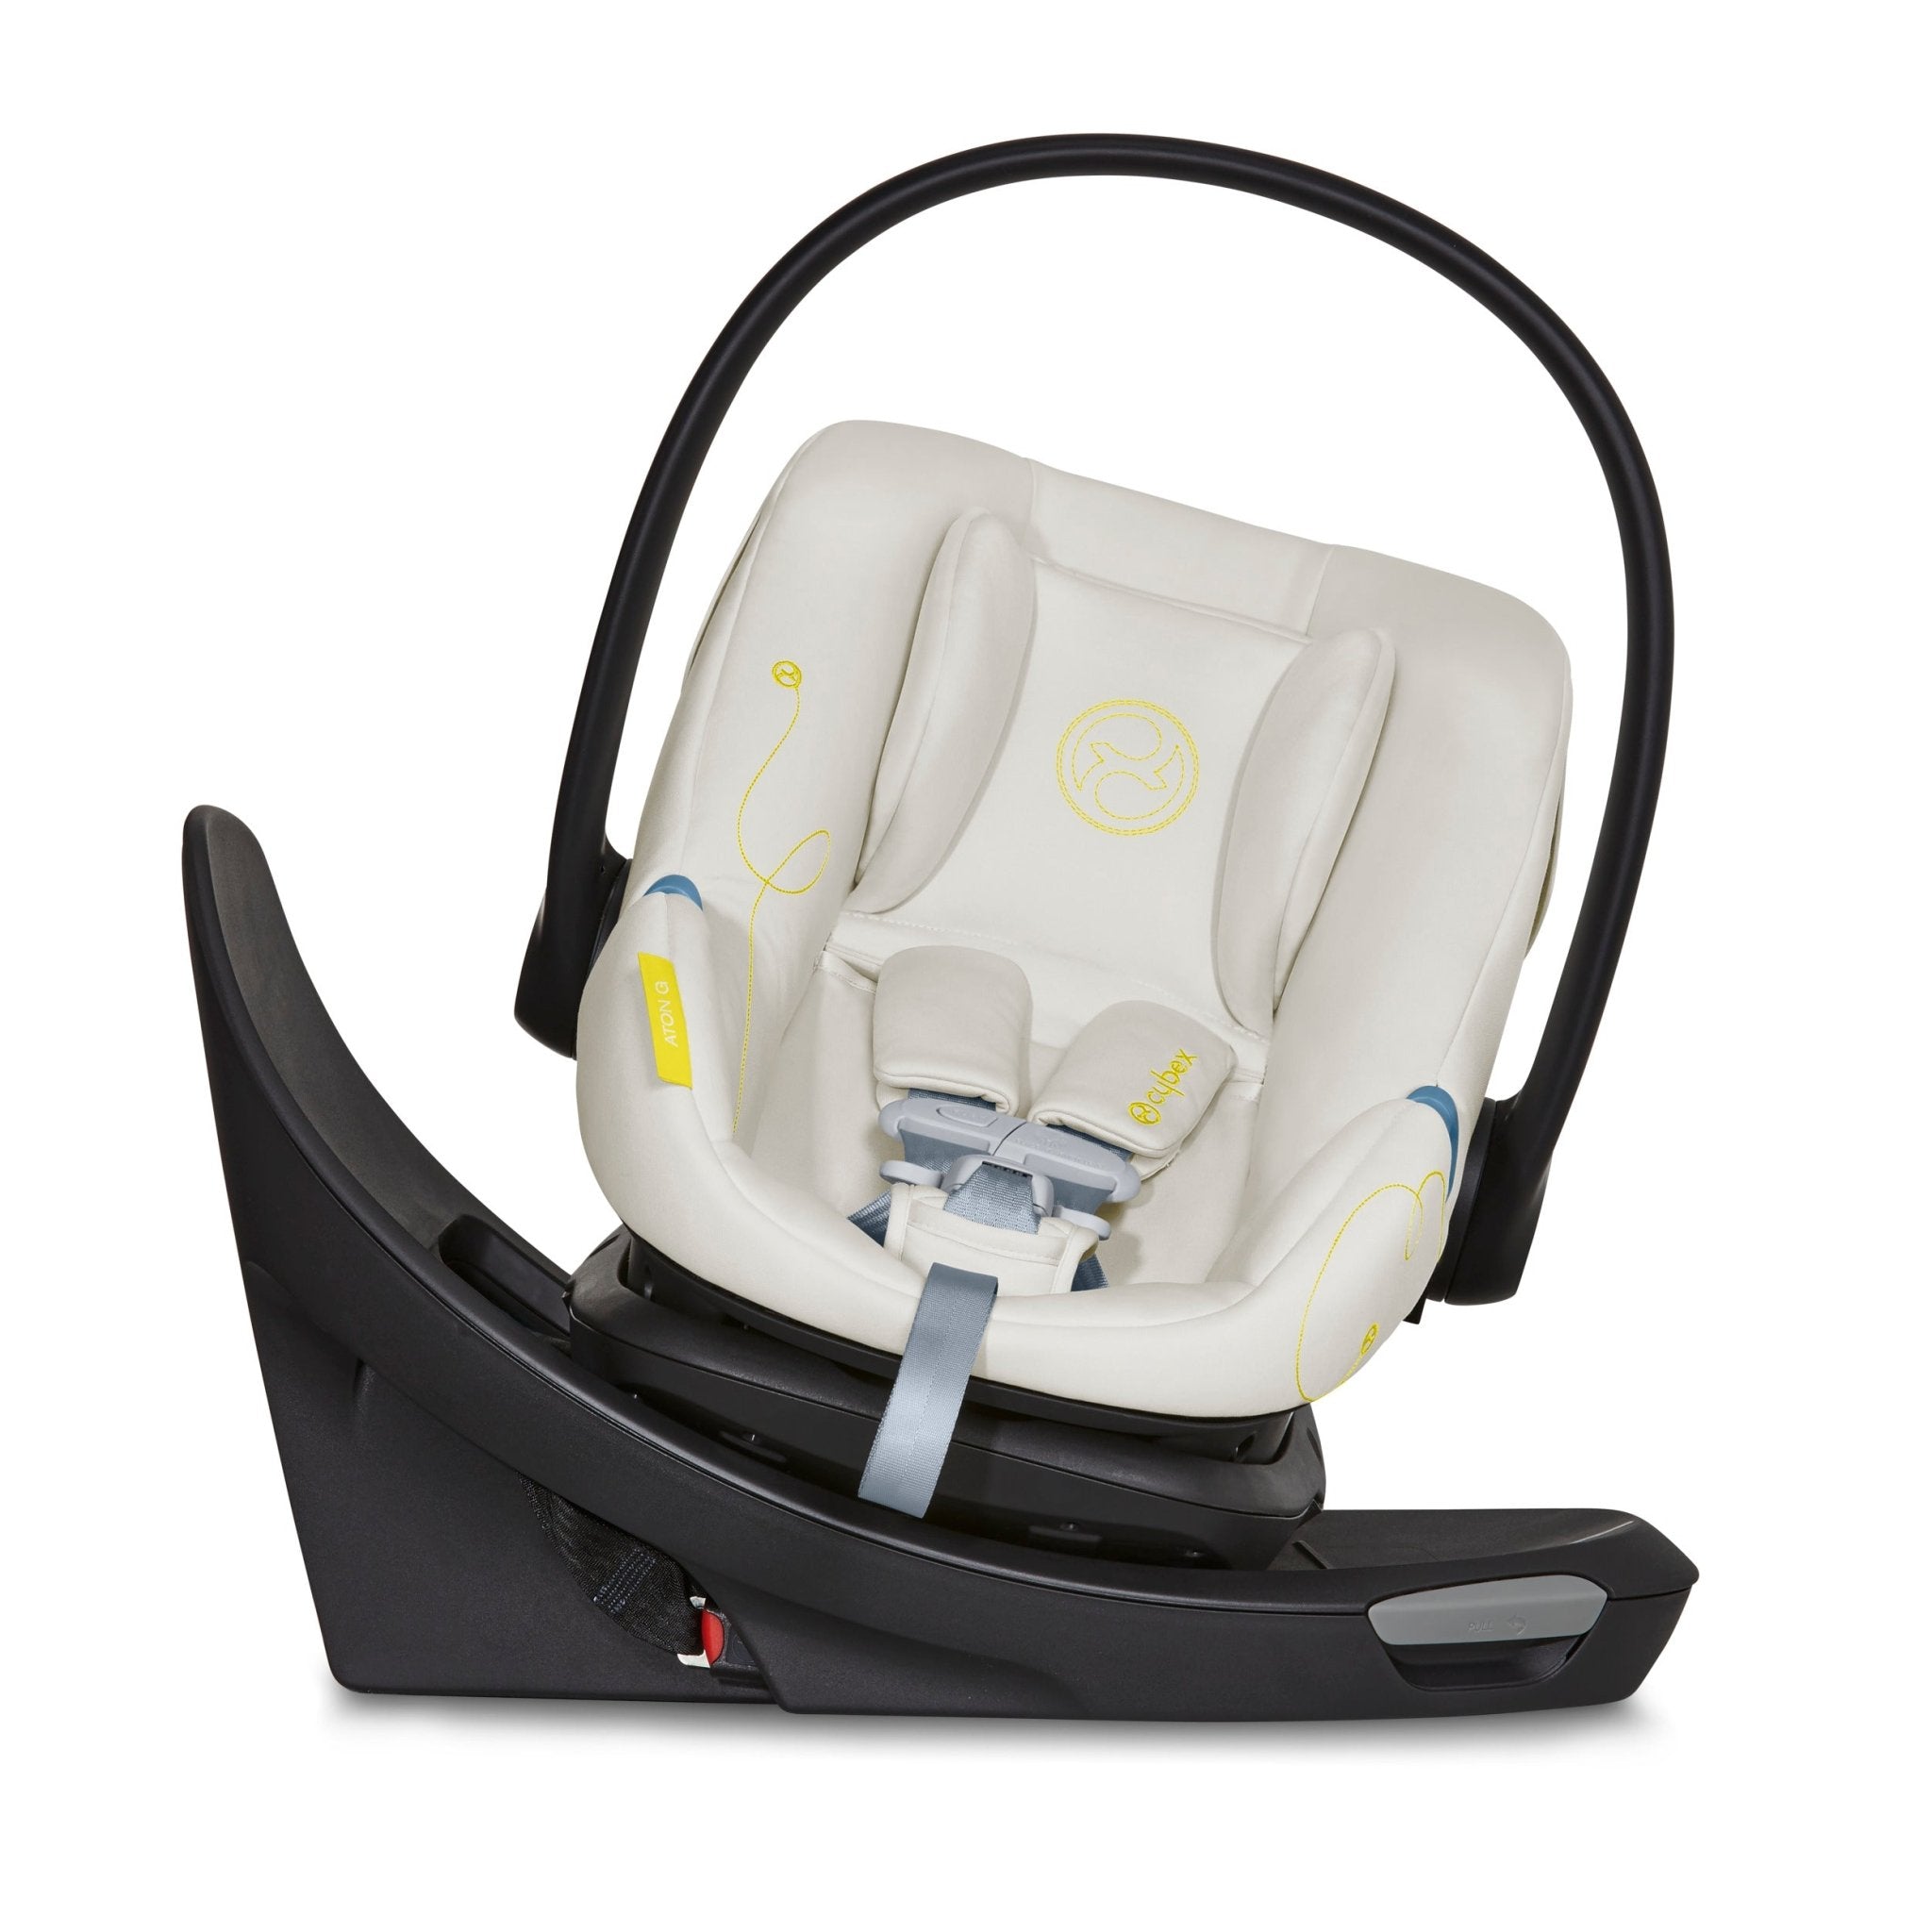 Cybex Aton G Swivel Infant Car Seat - ANB Baby -4063846381340$300 - $500